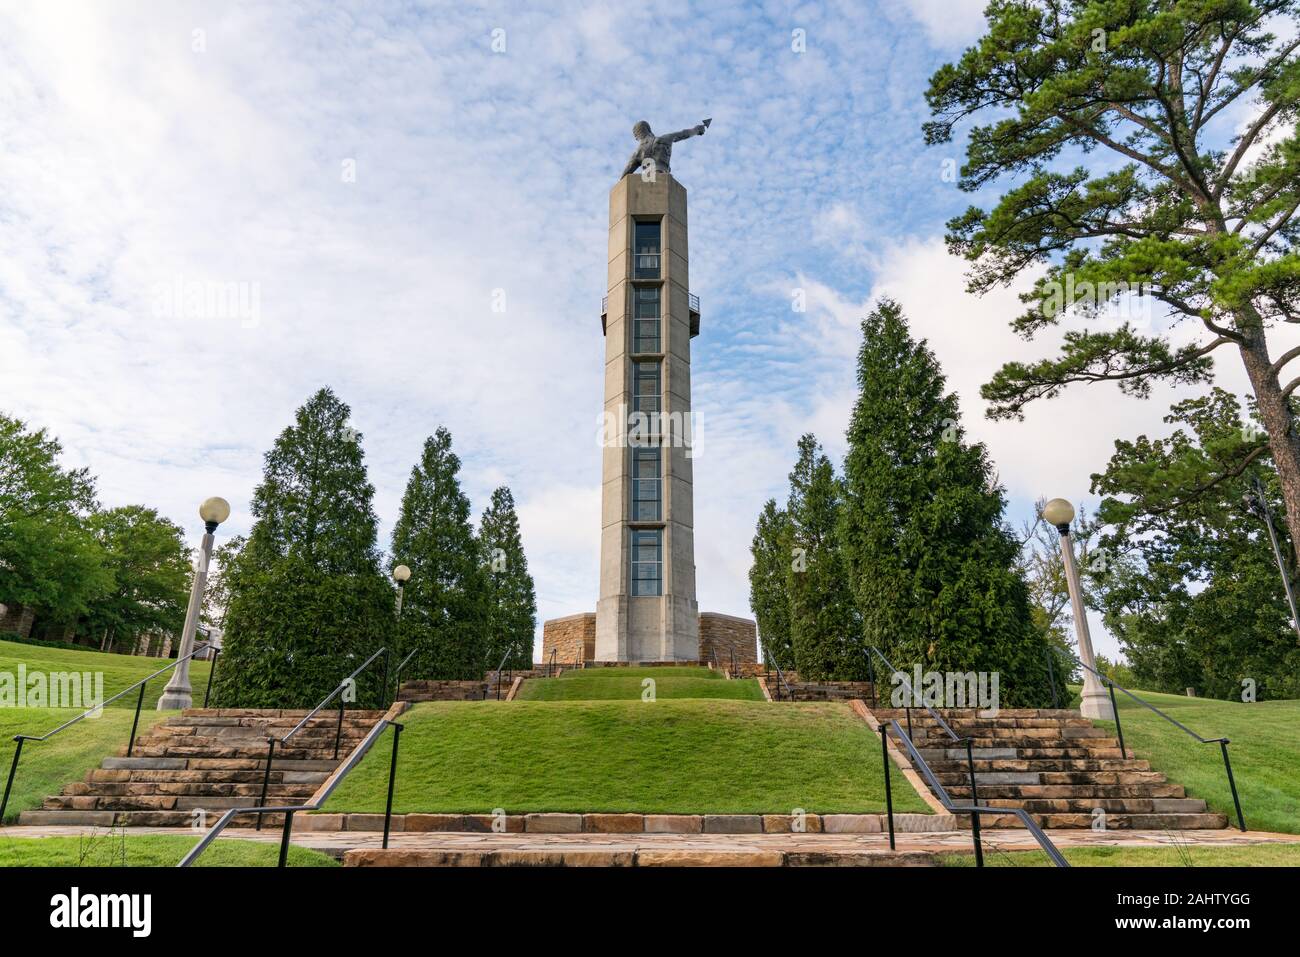 Birmingham, AL - October 7, 2019: Observation Tower in Vulcan Park in Birmingham, Alabama Stock Photo